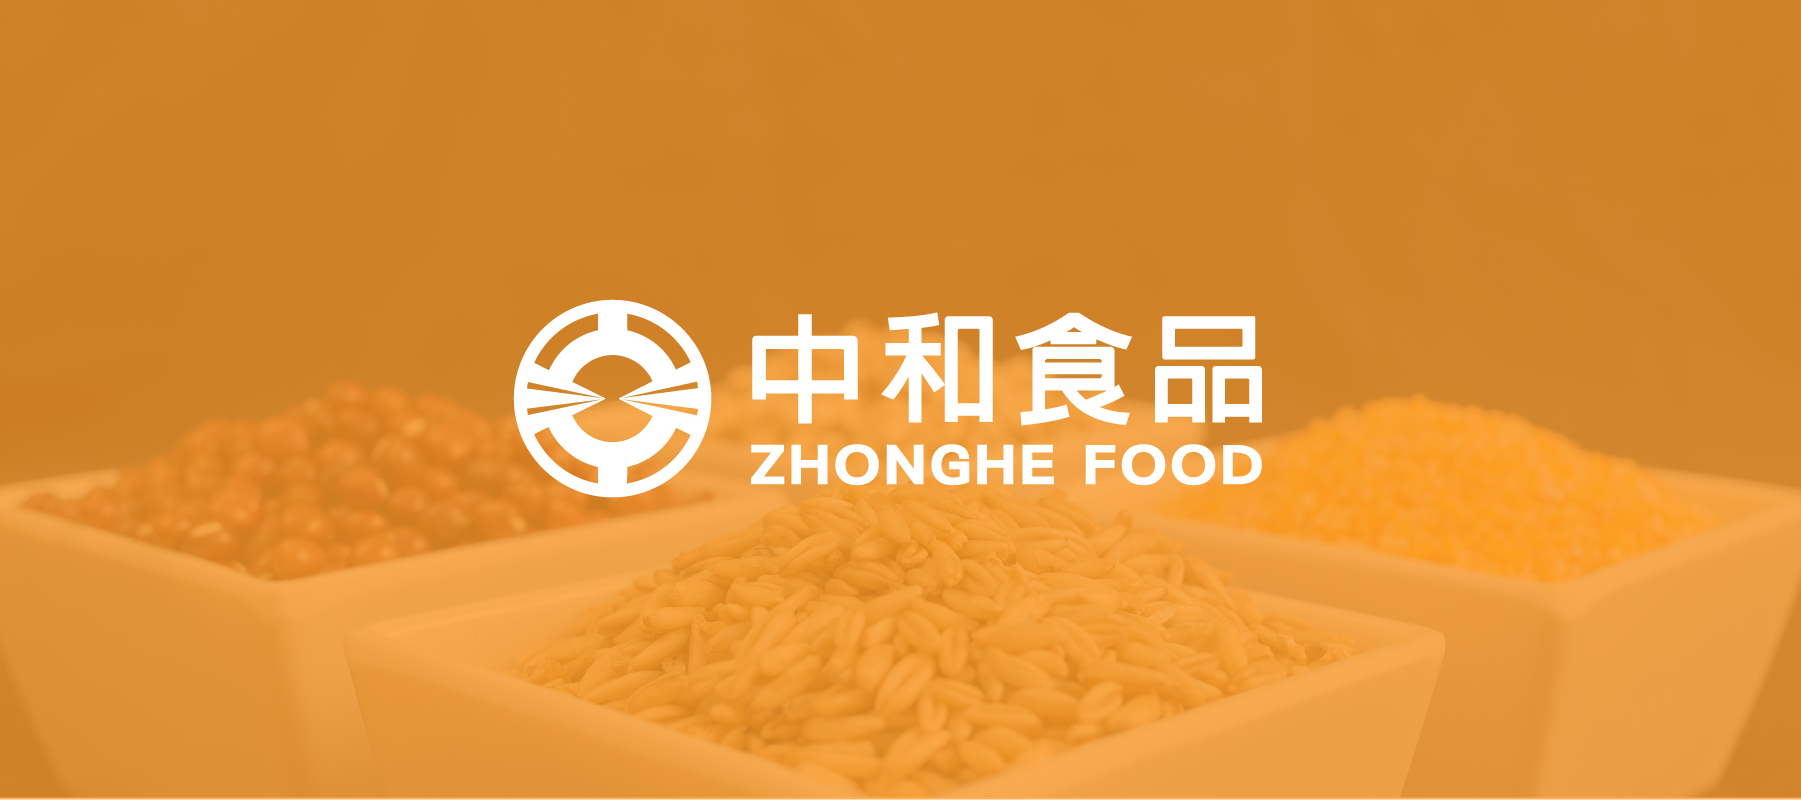 zhonghe-1.png